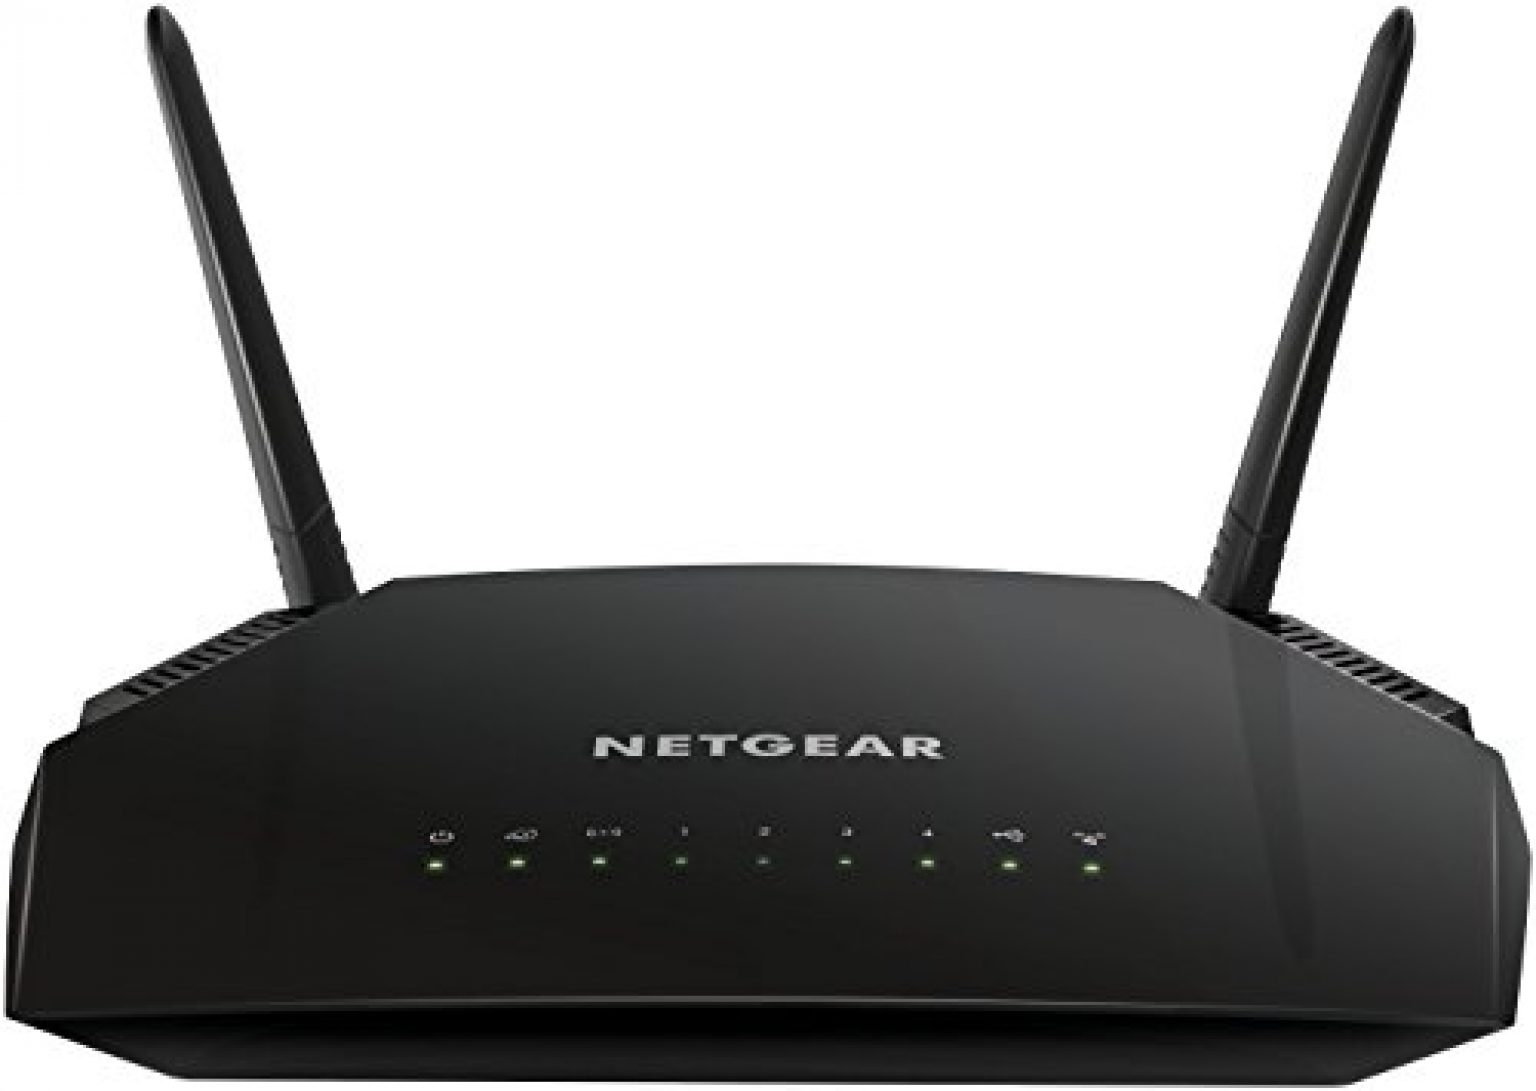 wireless internet router